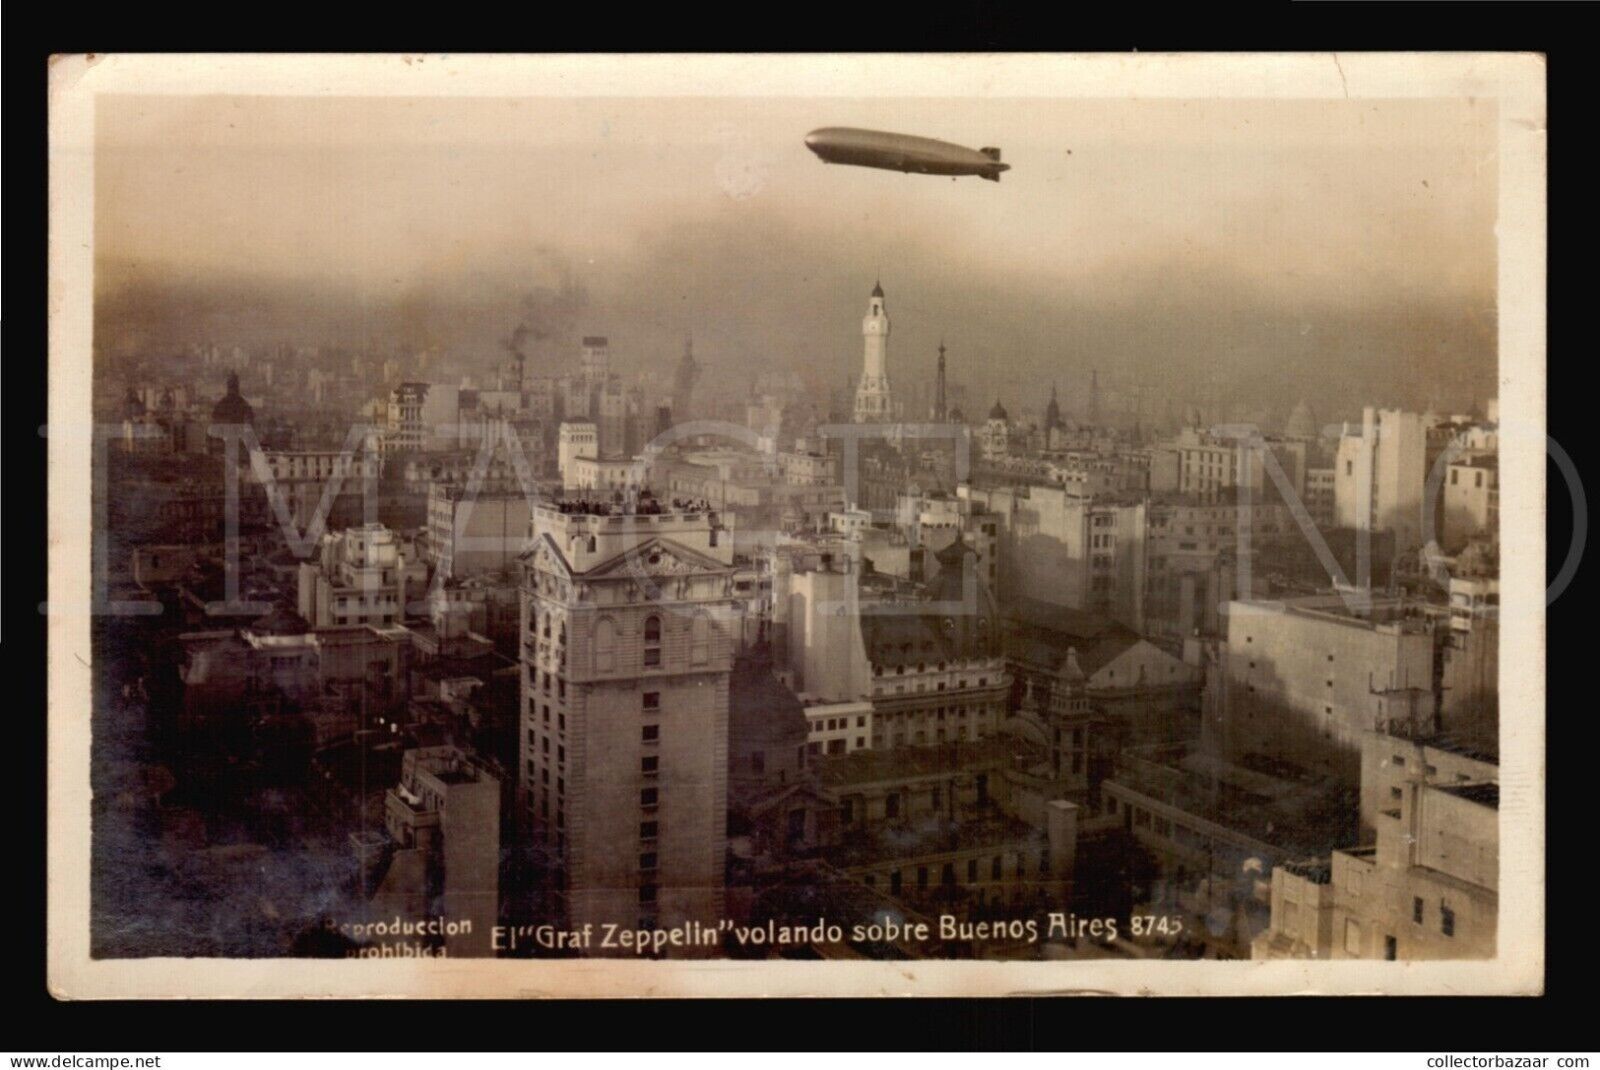 Vintage Real Photo postcard RPPC Buenos Aires Argentina Graf Zeppelin Aircraft